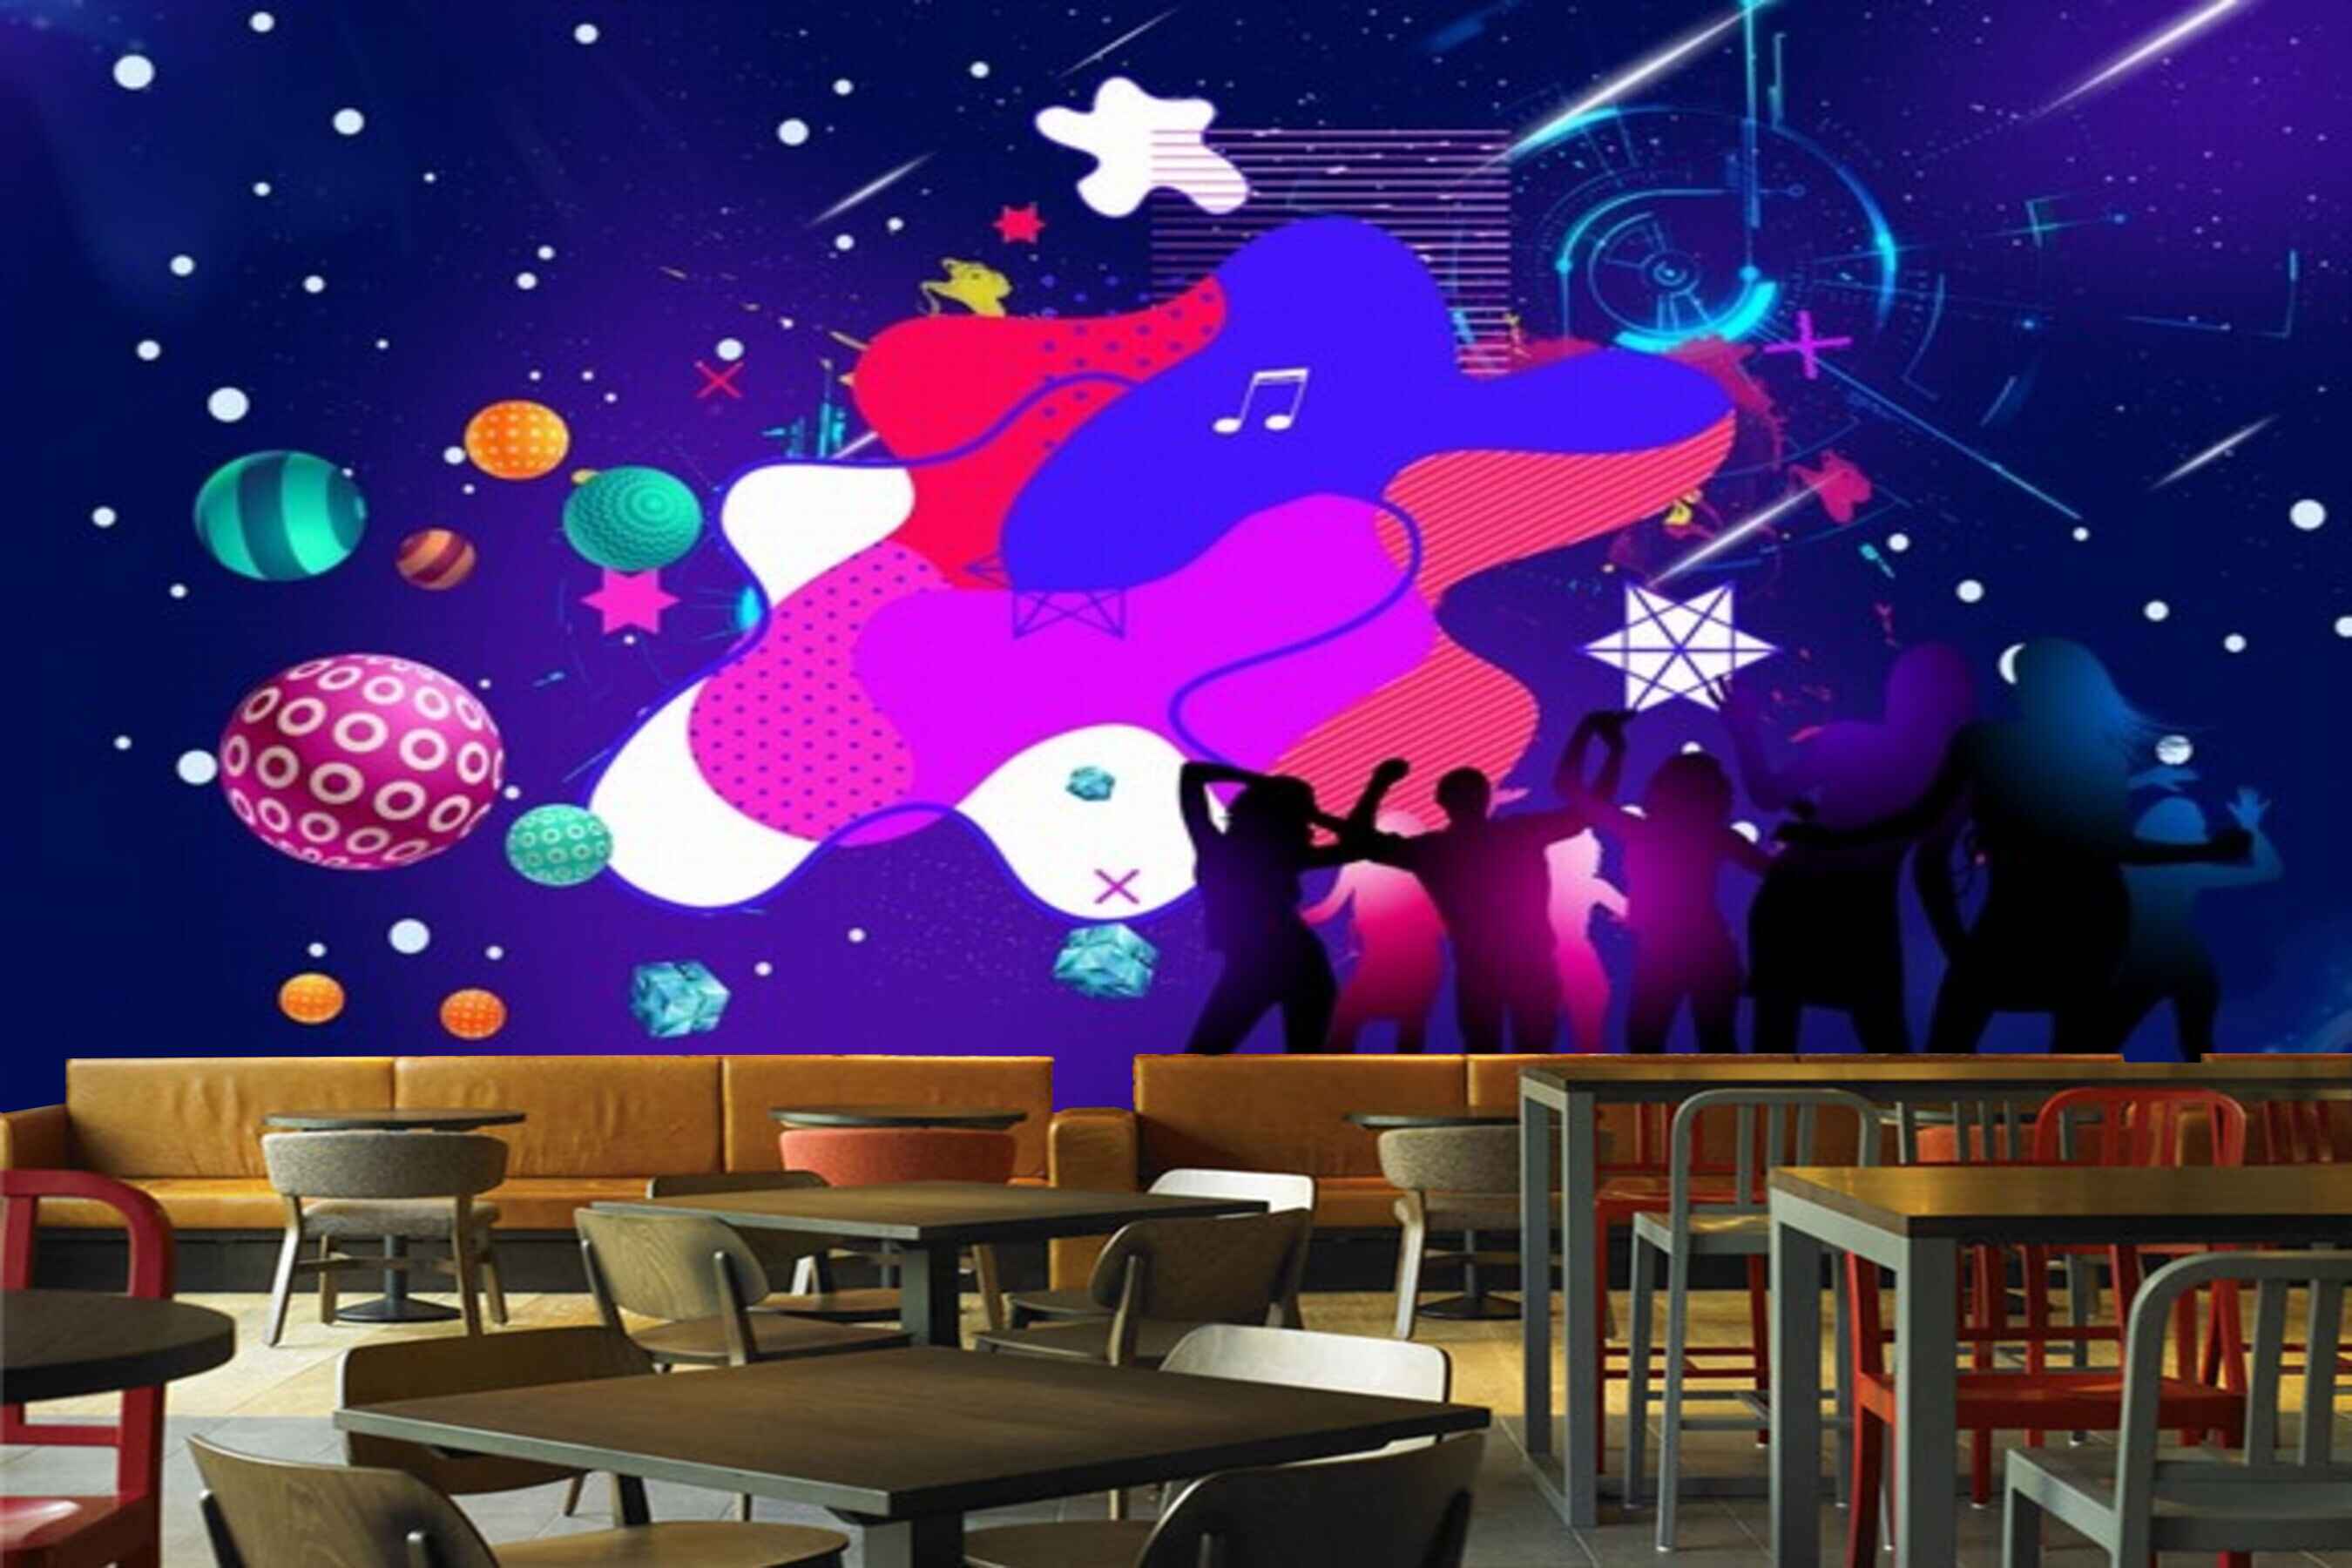 Avikalp MWZ3466 Music Singer Instrument Players Bubbles HD Wallpaper for Disco Club Karaoke